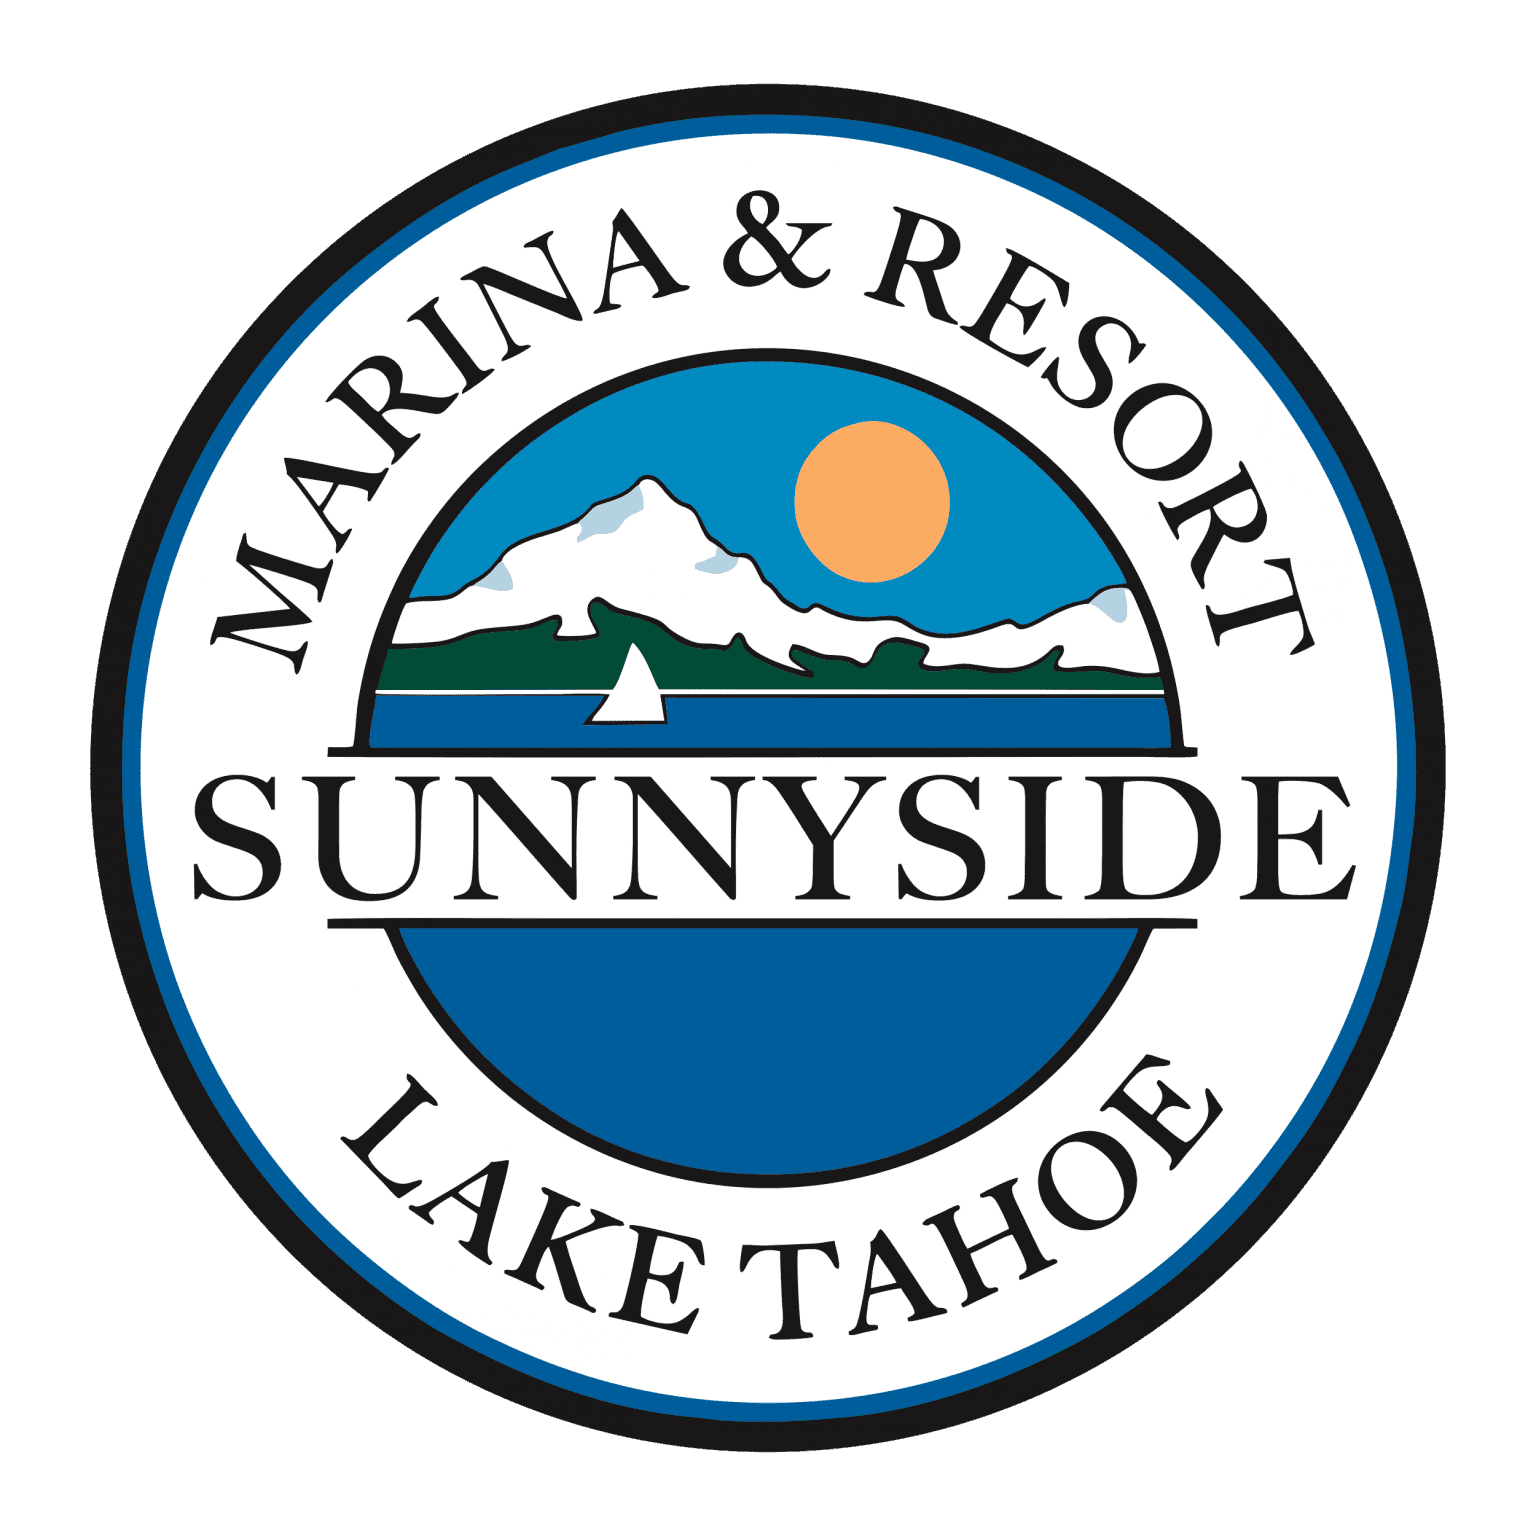 SunnySide Marina & Resort Logo Lake Tahoe Boat Rentals